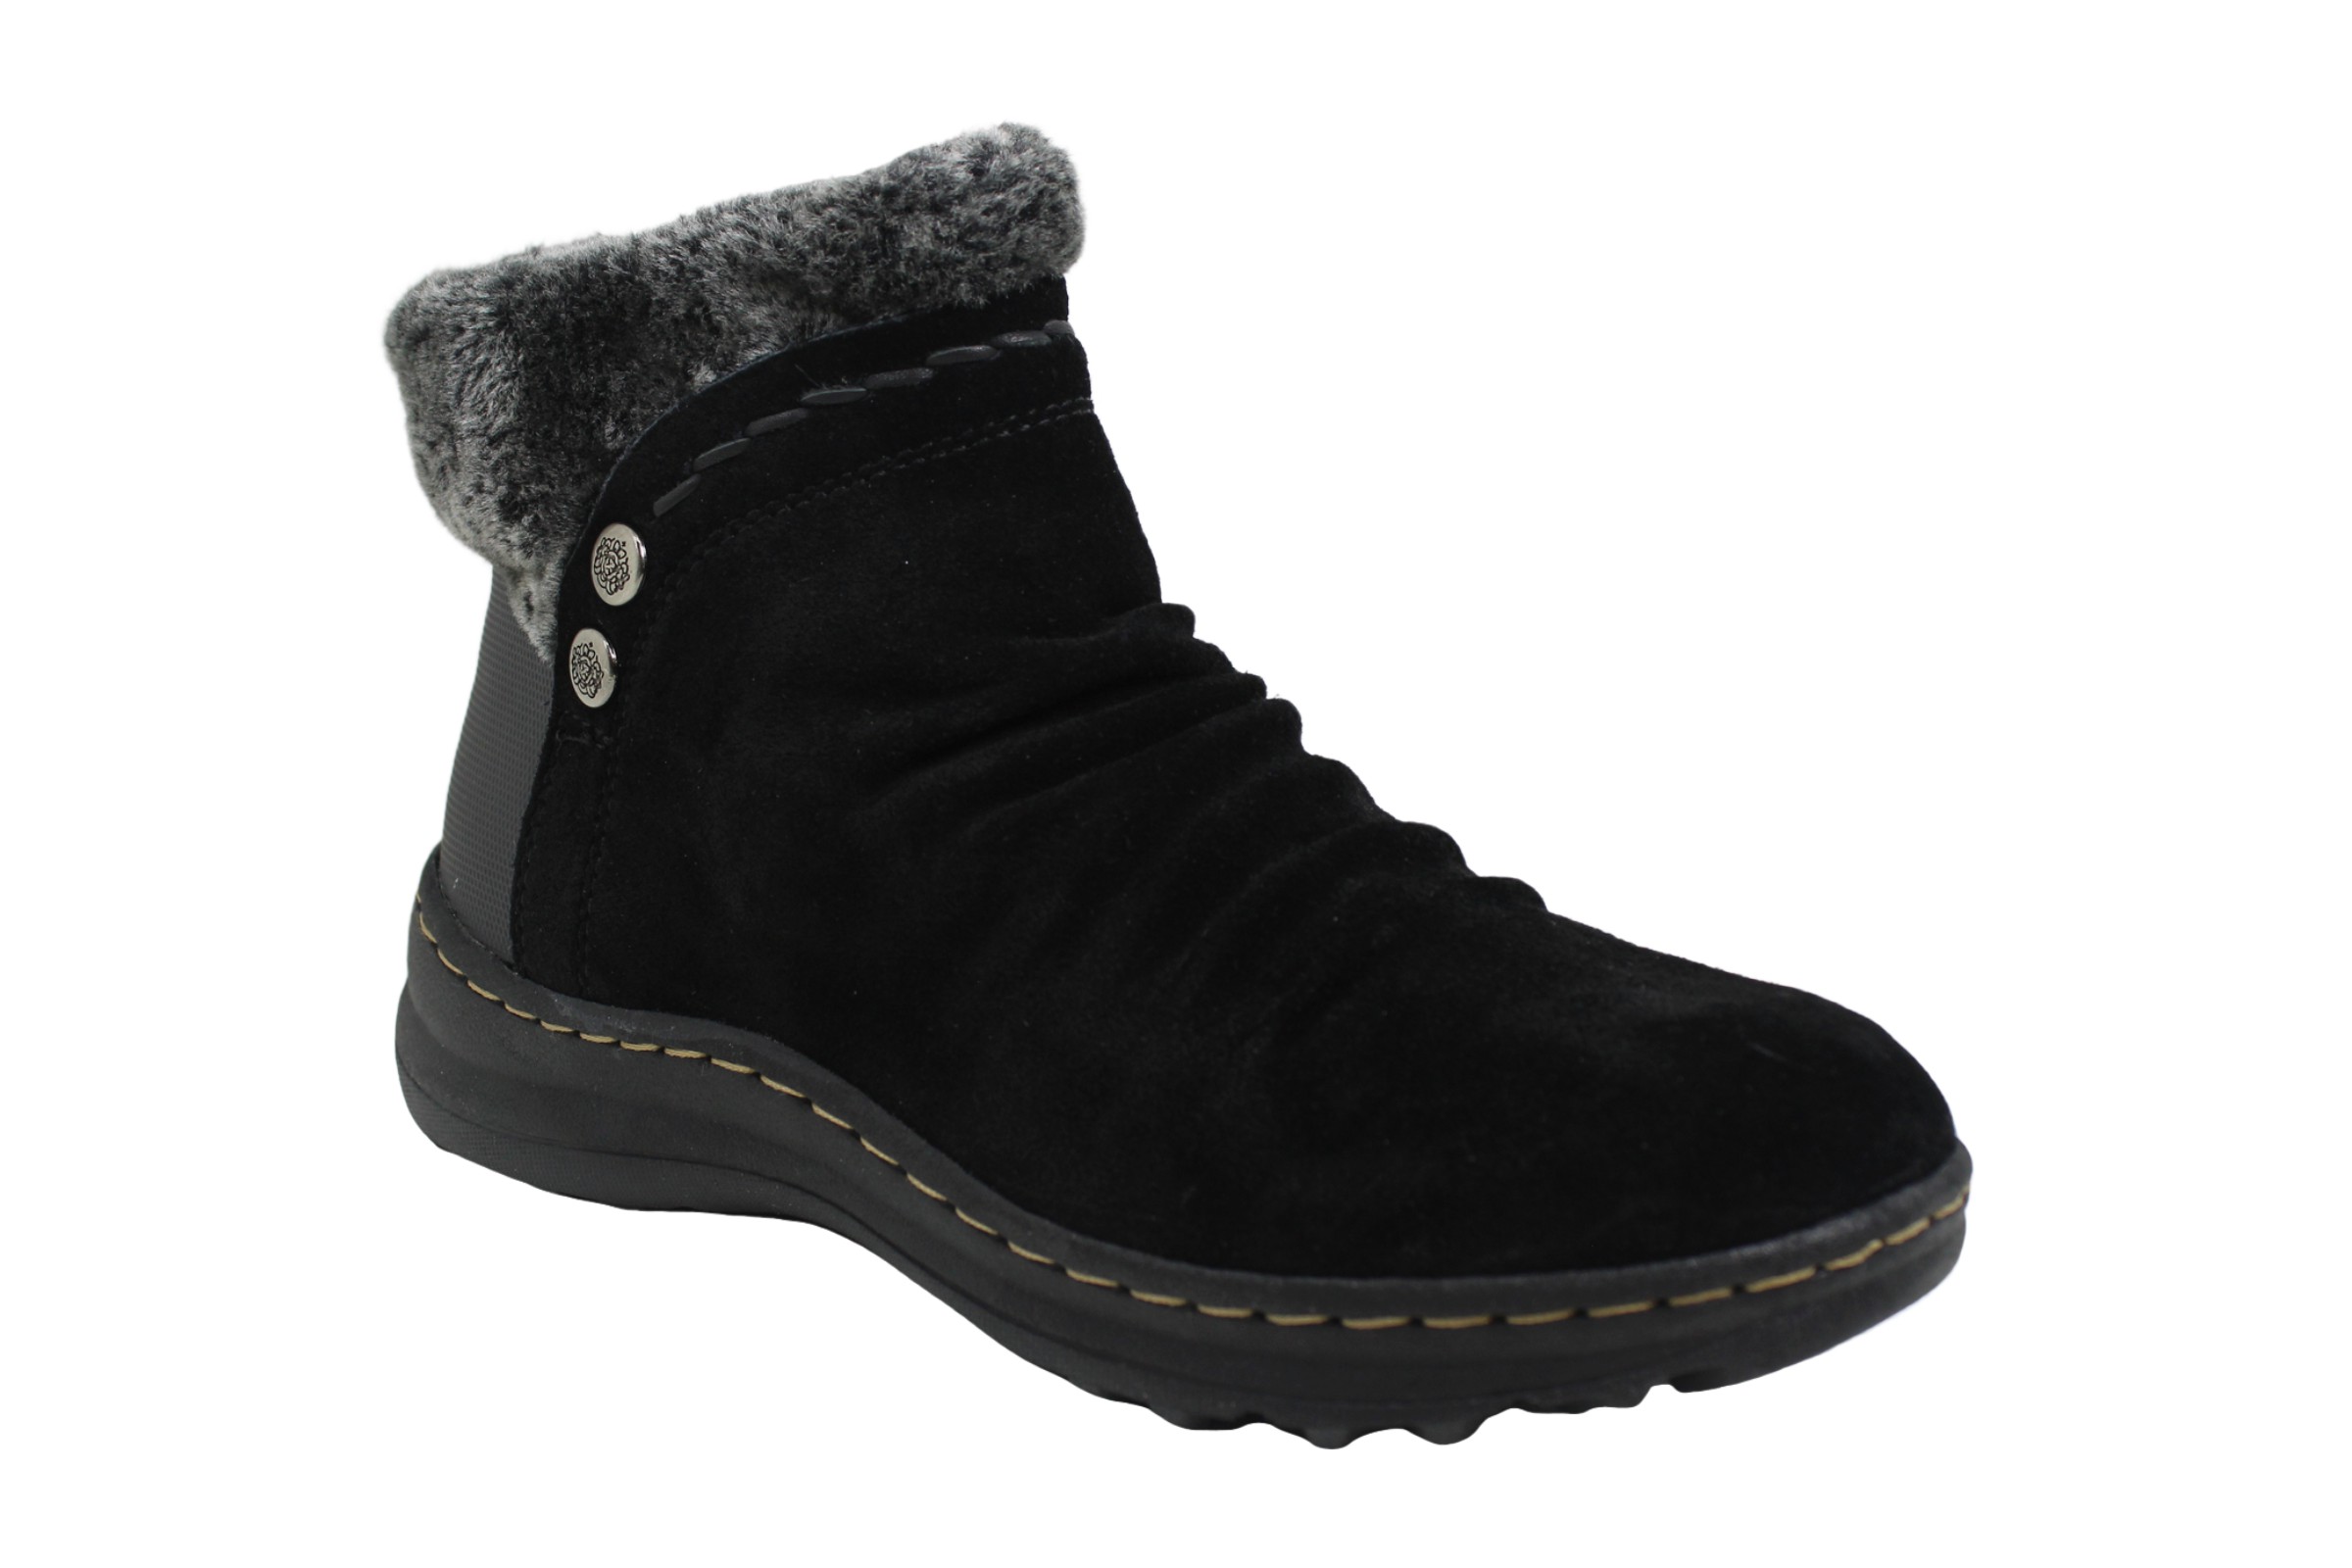 Bare Traps Womens Boots in Black Color, Size 5.5 FCQ 194072039379 | eBay